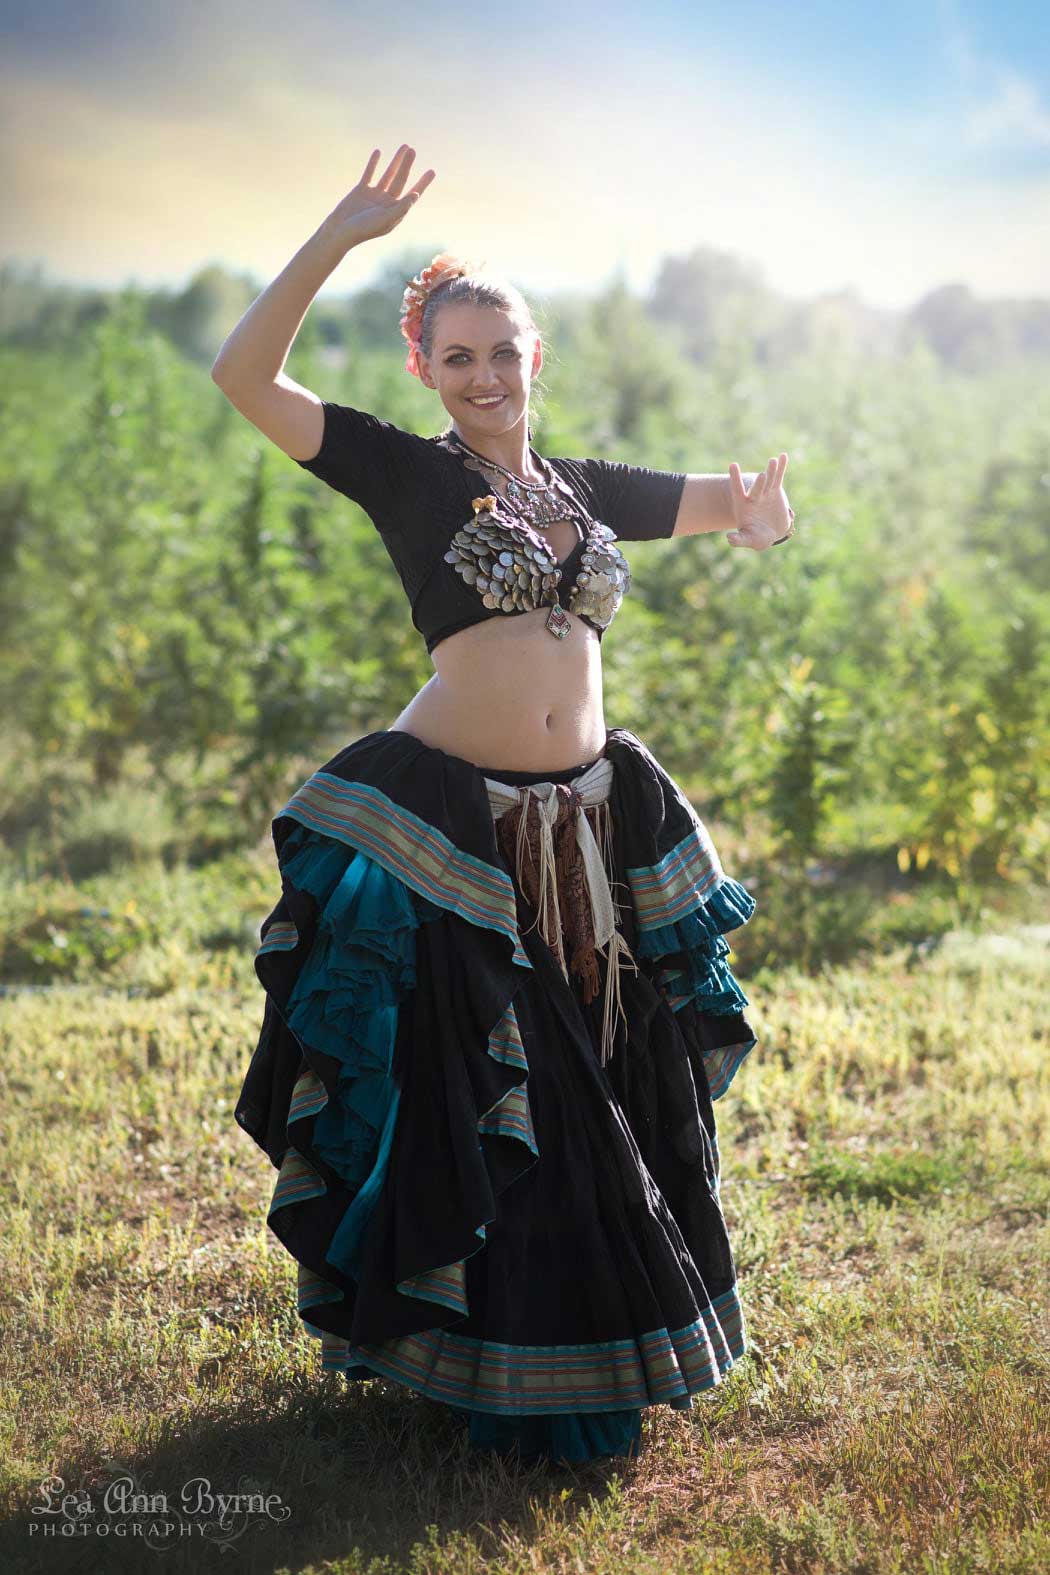 Tribe Nawaar's Emily Mullis 2020, Lea Ann Byrne Photography